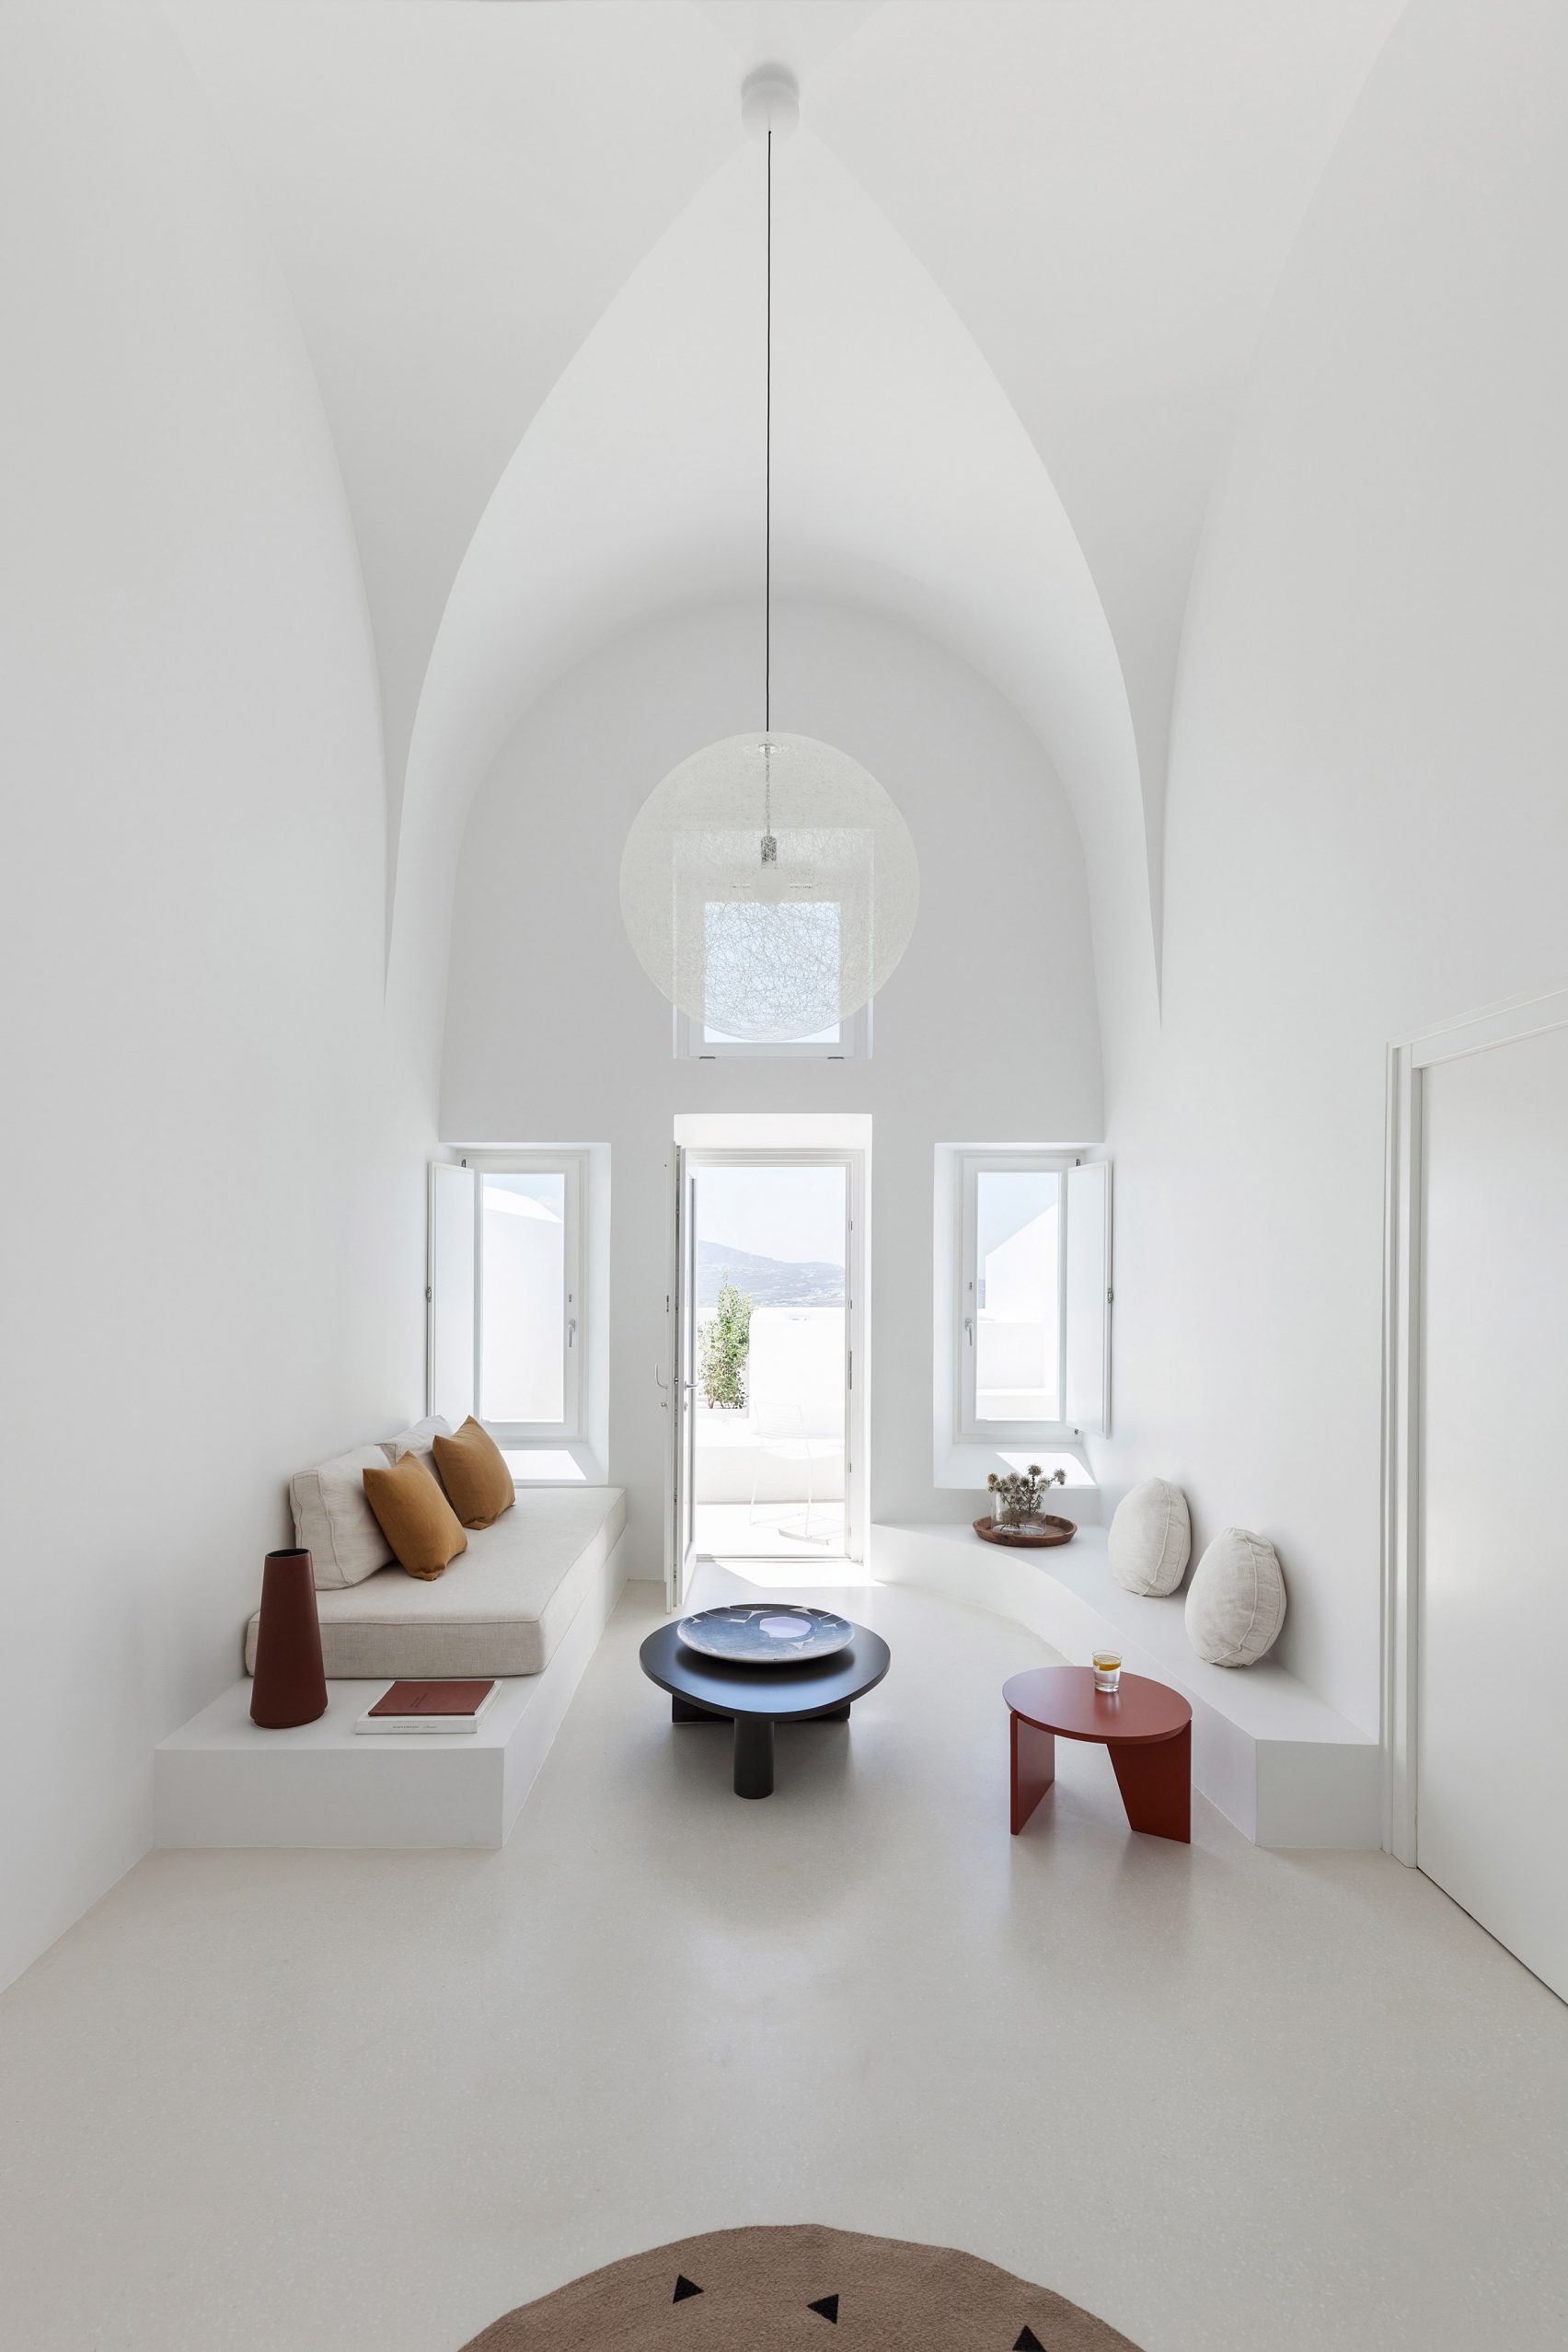 summer-residence-santorini-kapsimalis-architects-greece-architecture_dezeen_2364_col_16-1704x2556